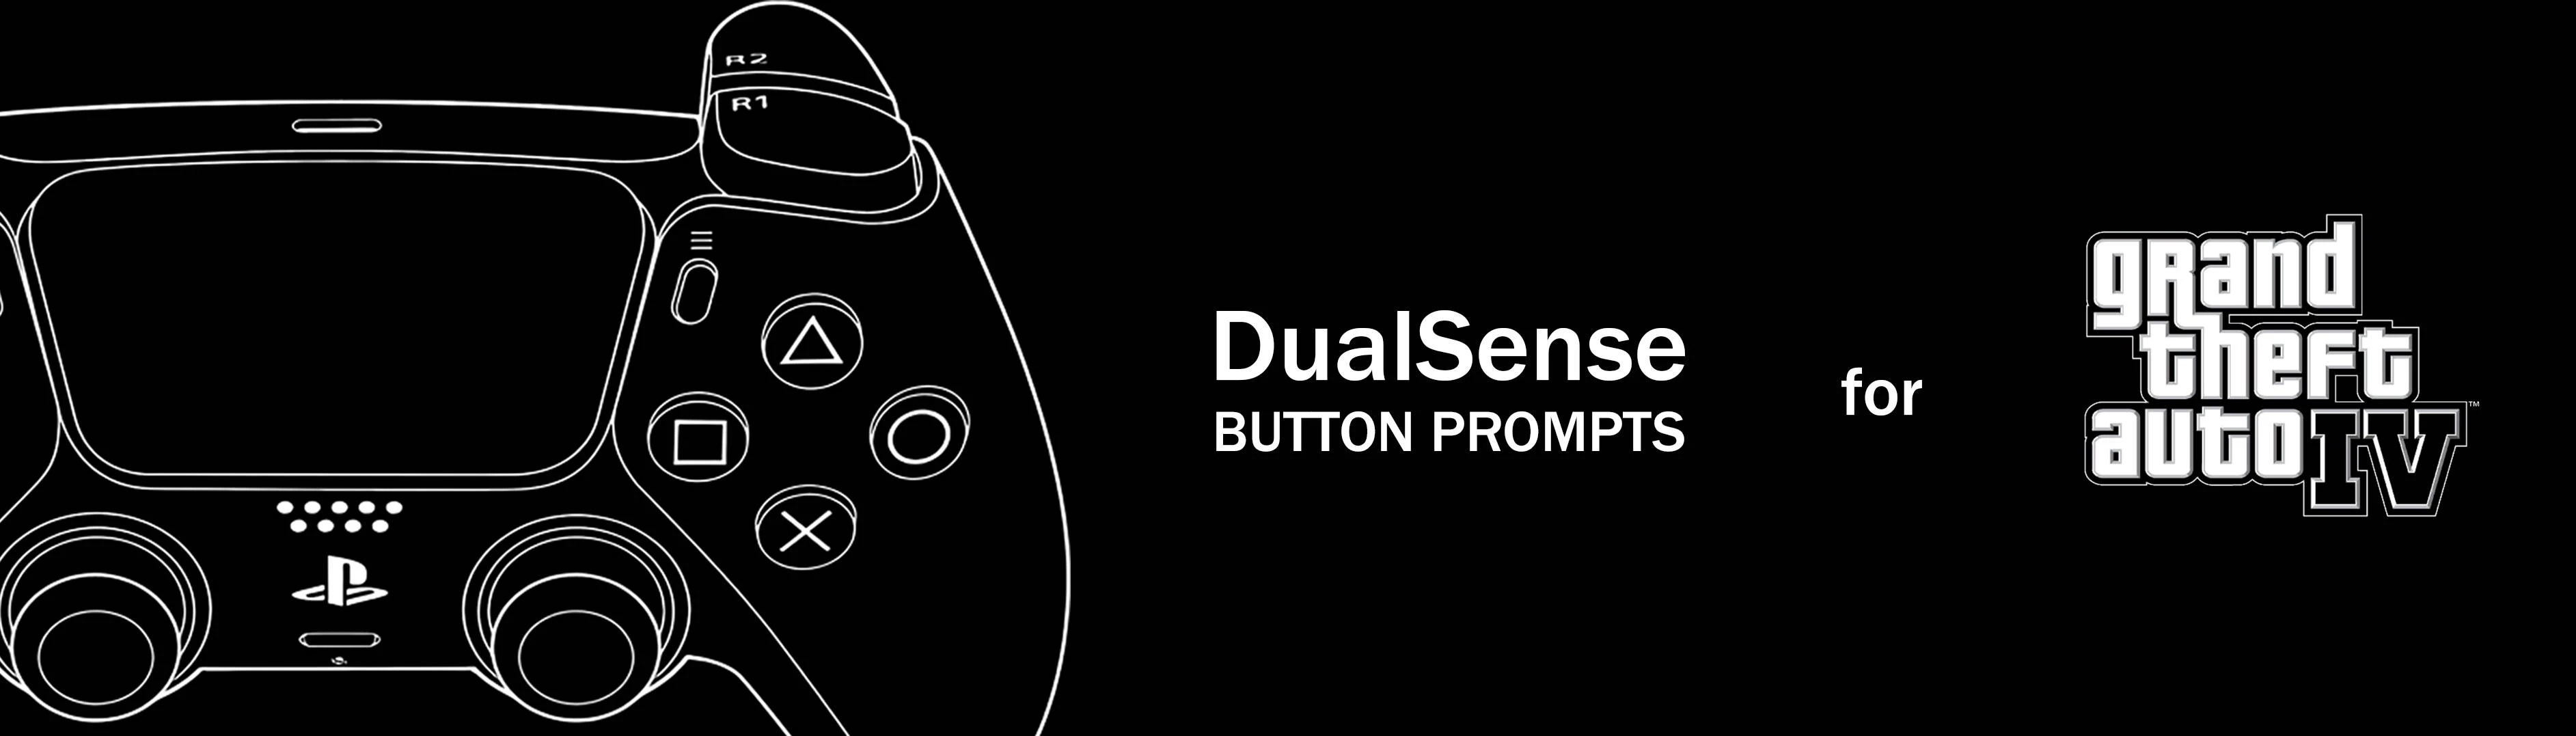 DualShock 4 Settings Screen Diagrams w/ Touchpad Instructions - GTA5-Mods .com